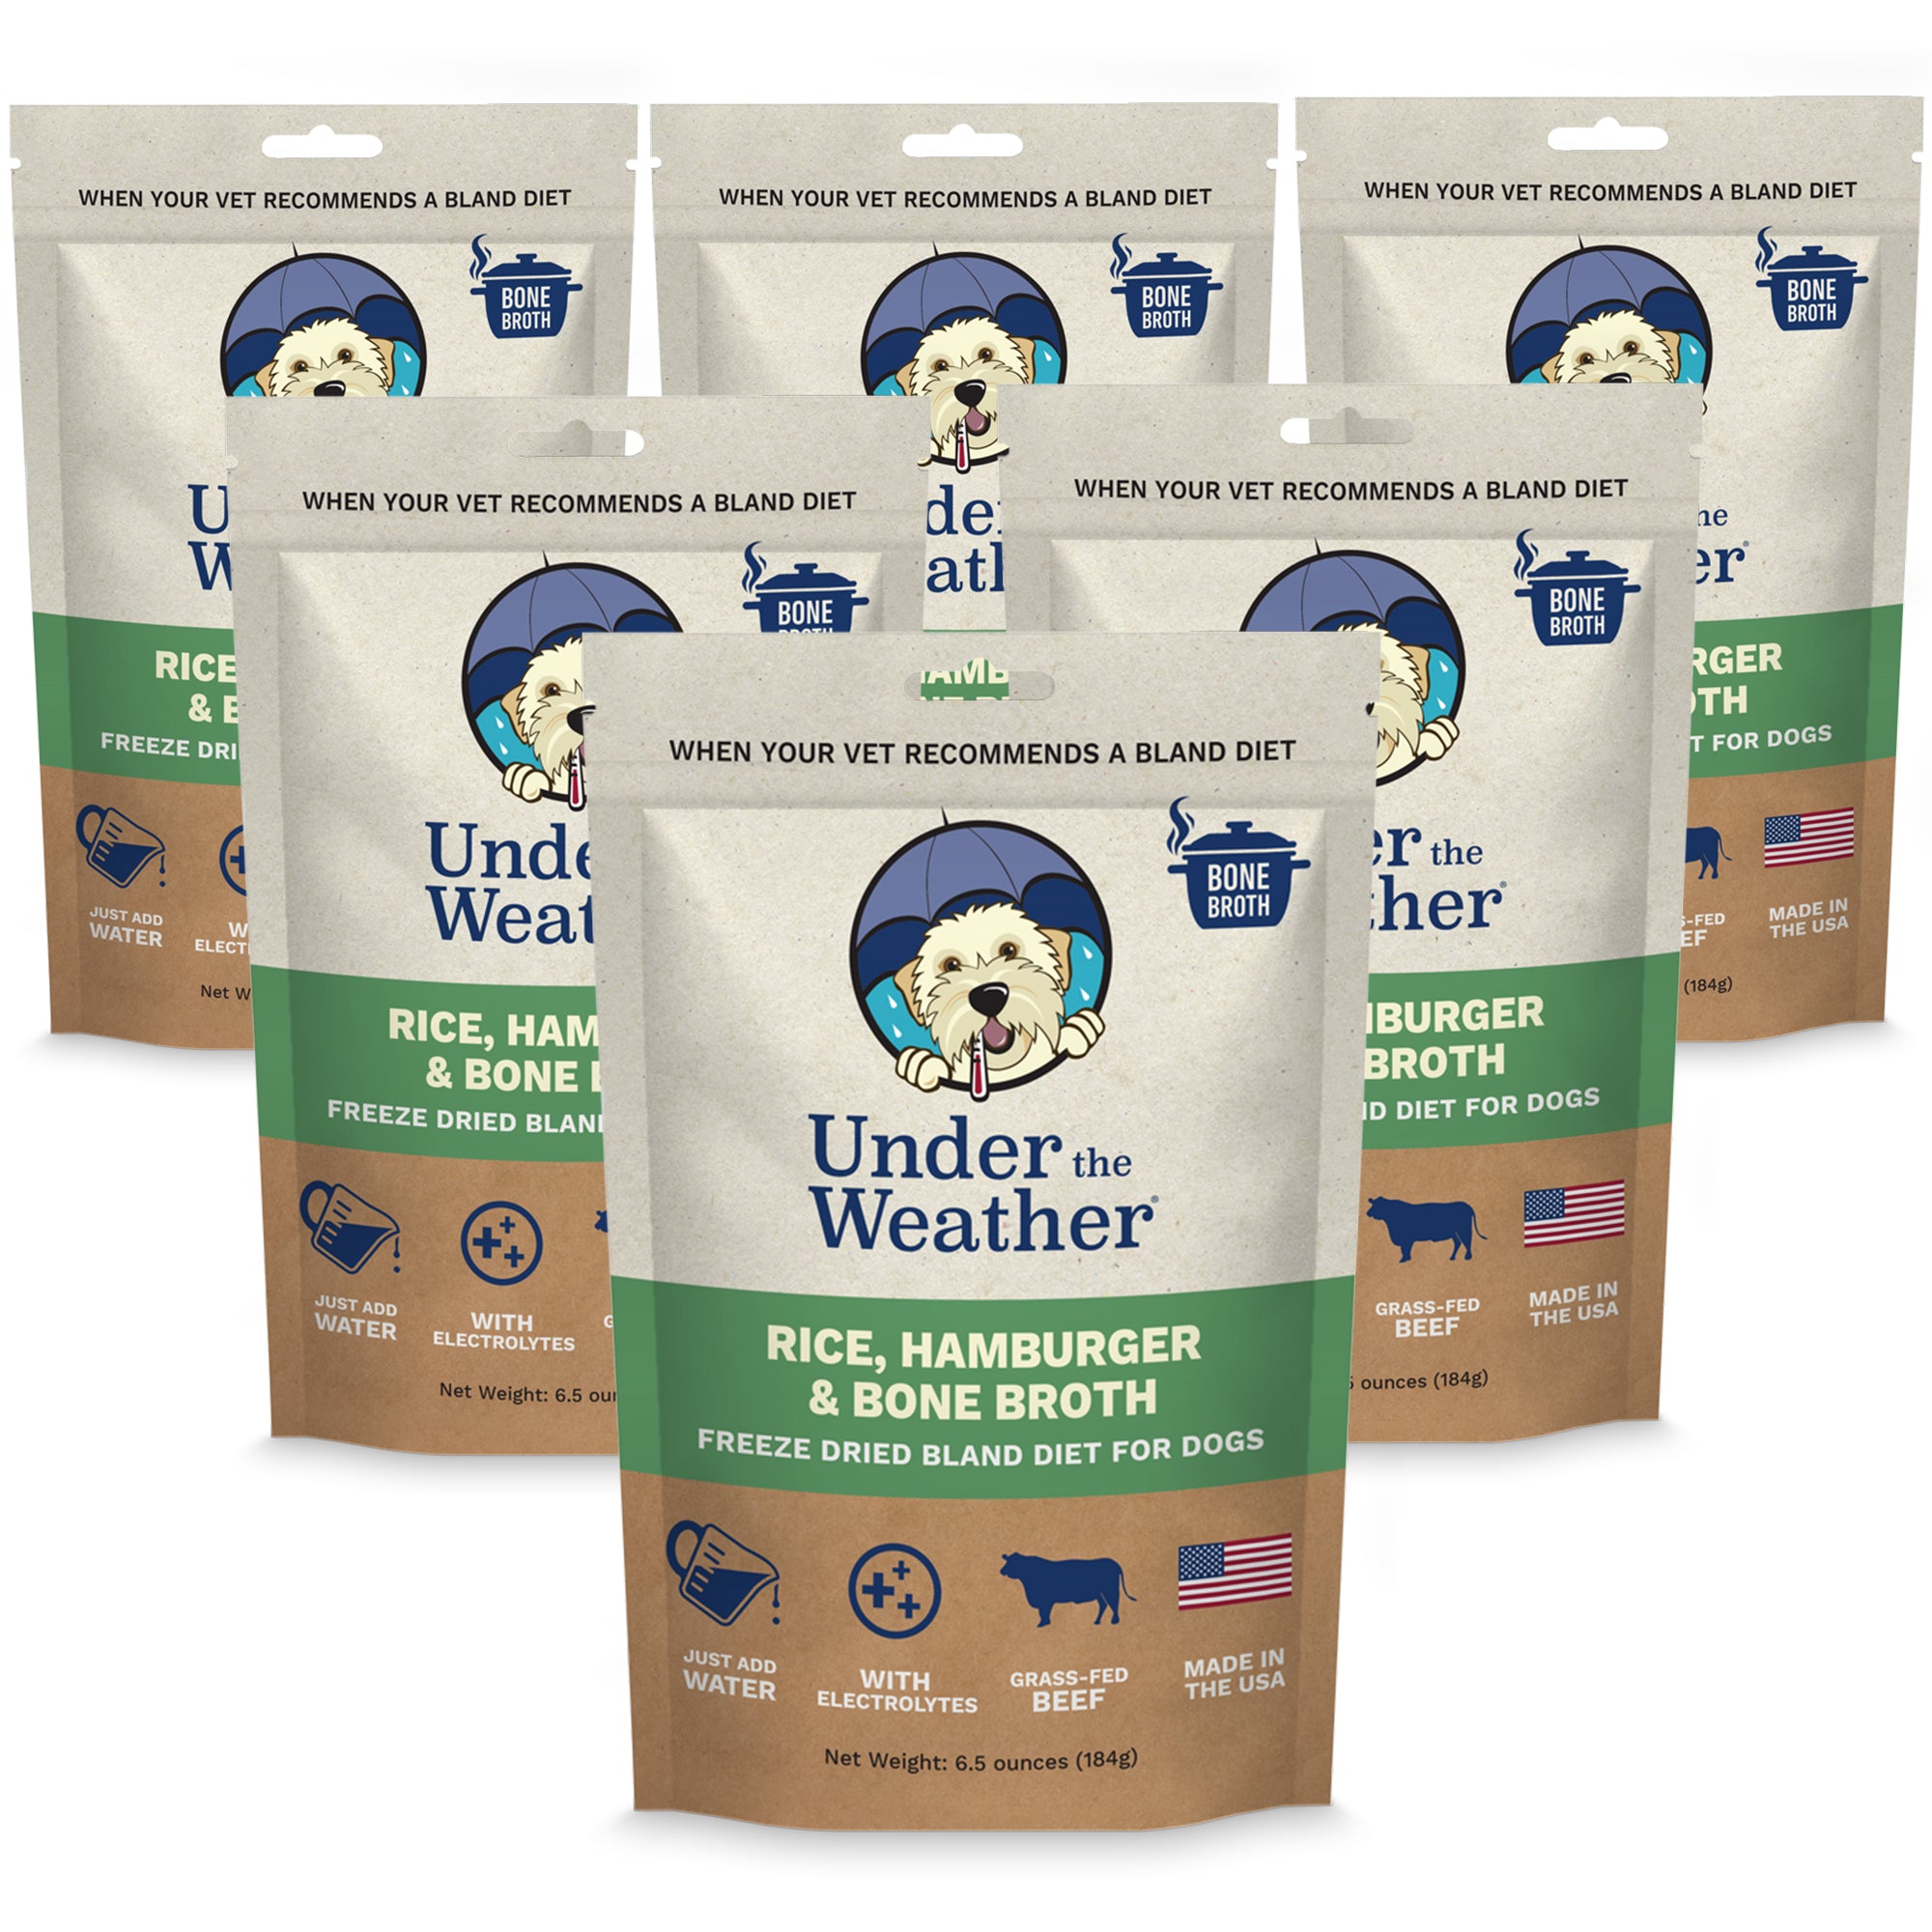 Hamburger, Rice, & Bone Broth Bland Diet For Dogs - 6 Pack